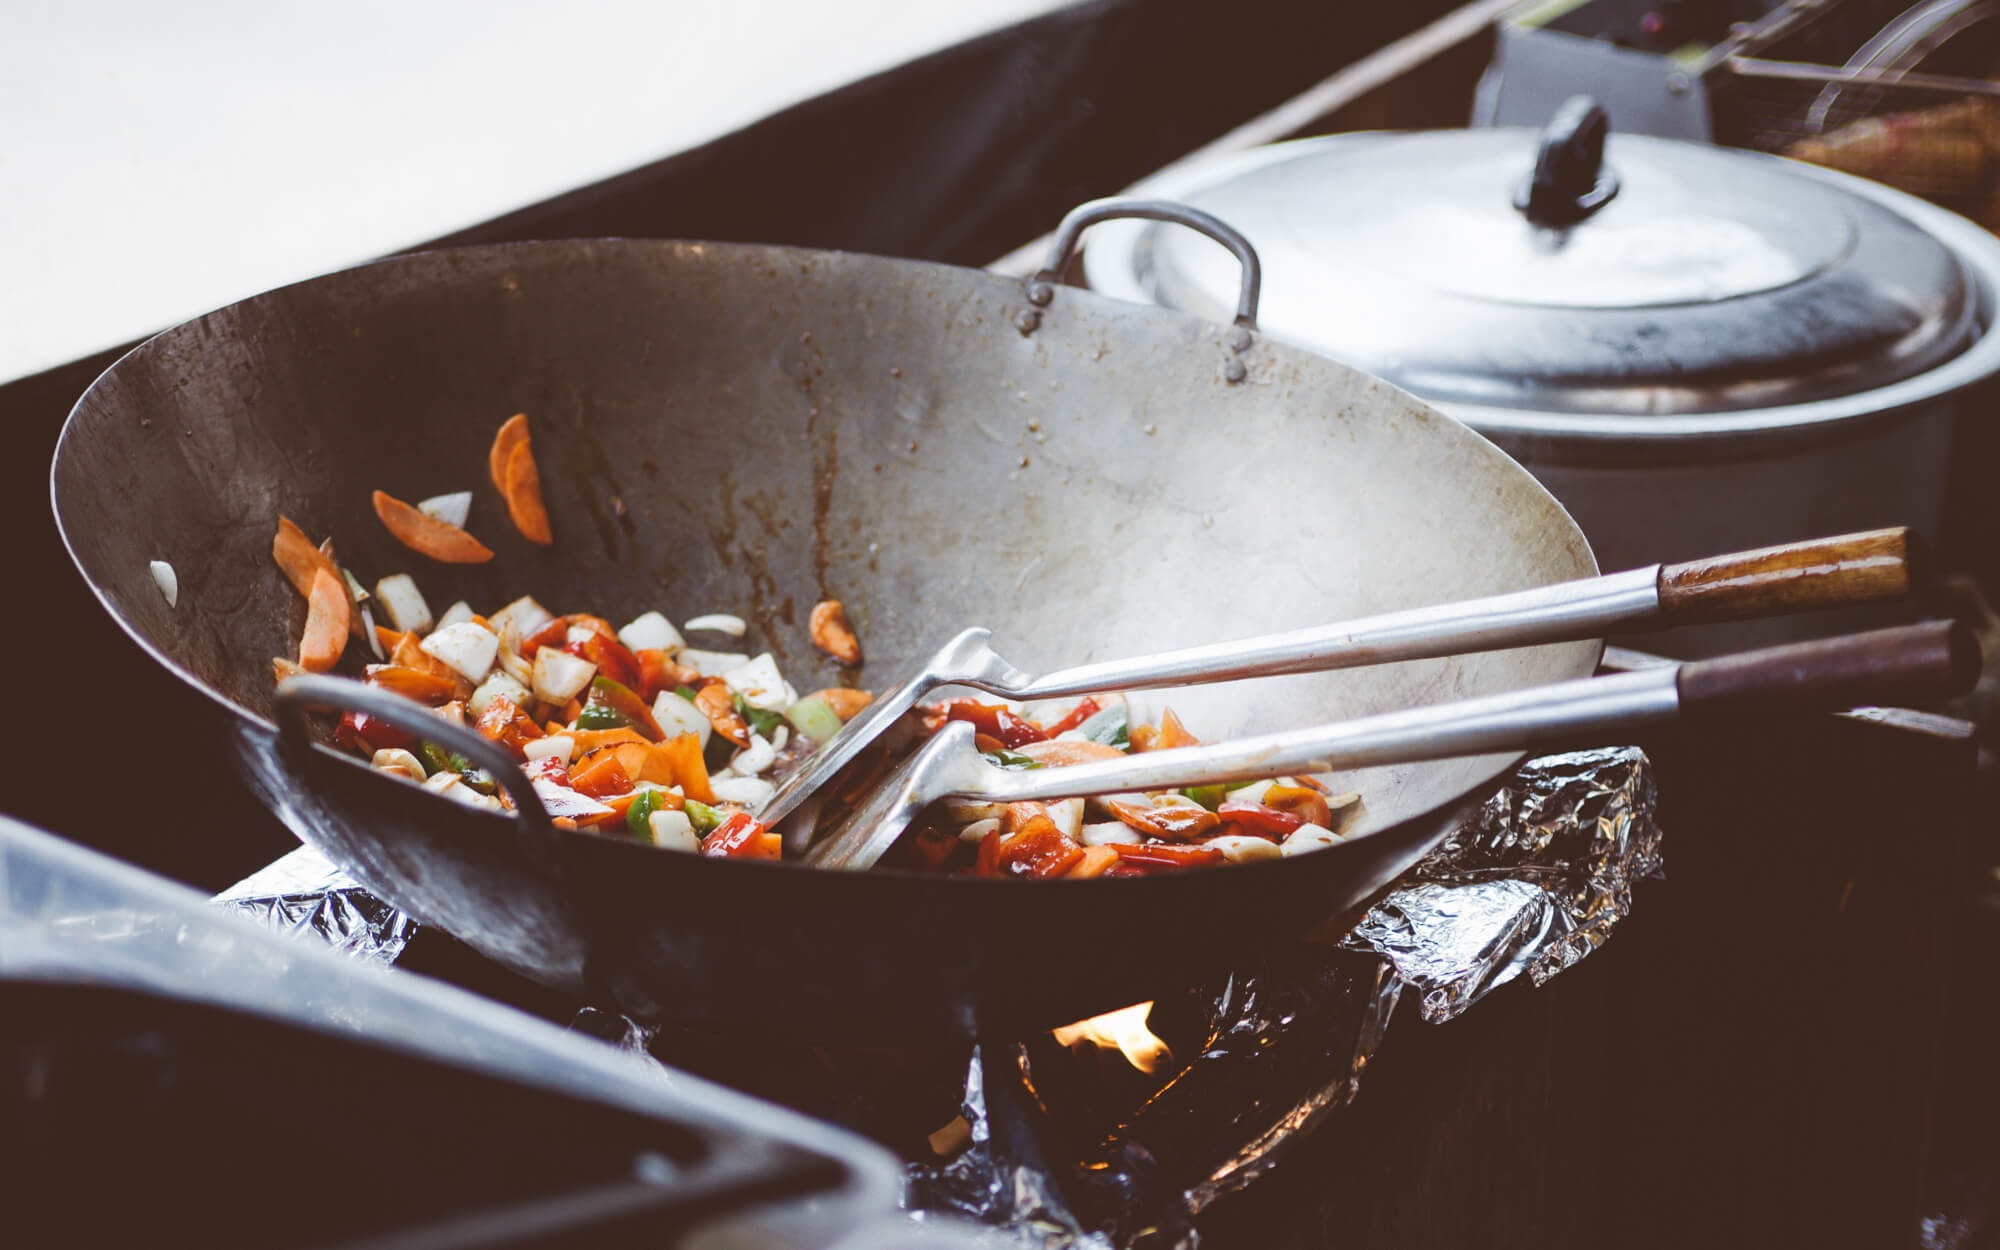 Cooking healthy by stir frying veggies